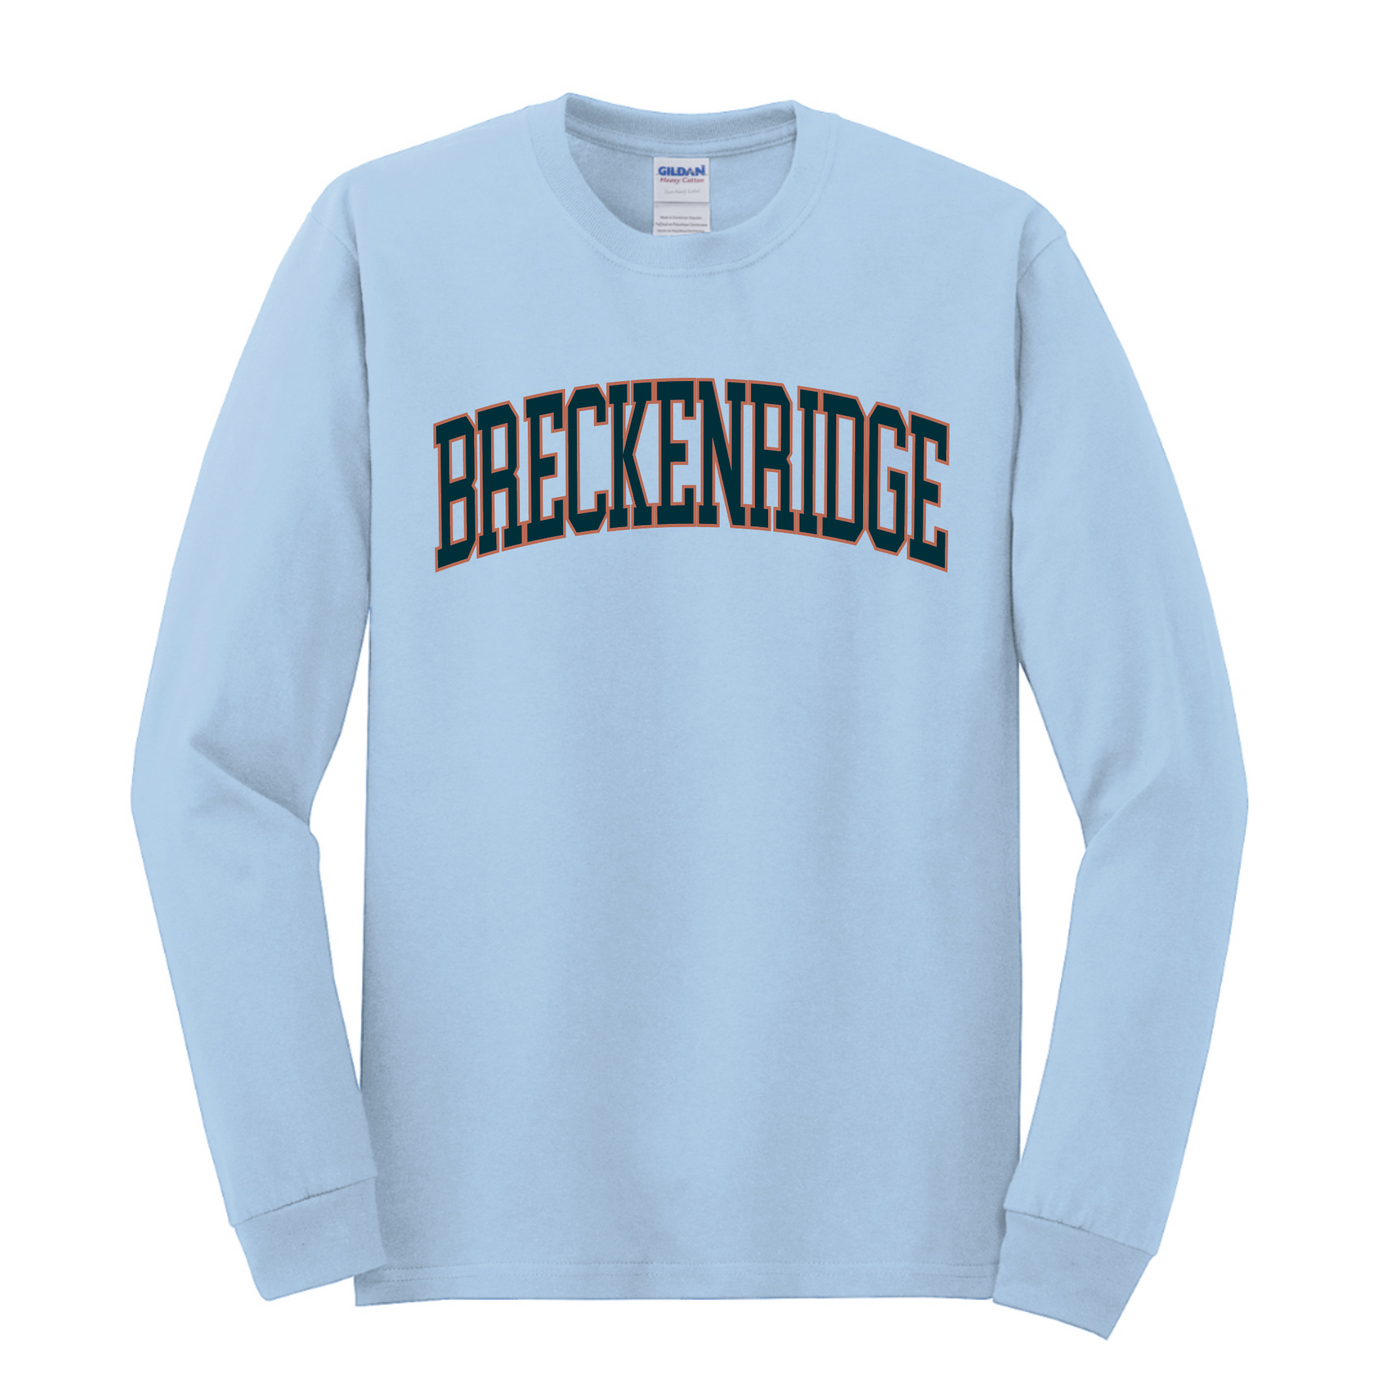 The Collegiate Breckenridge Long Sleeve Shirt